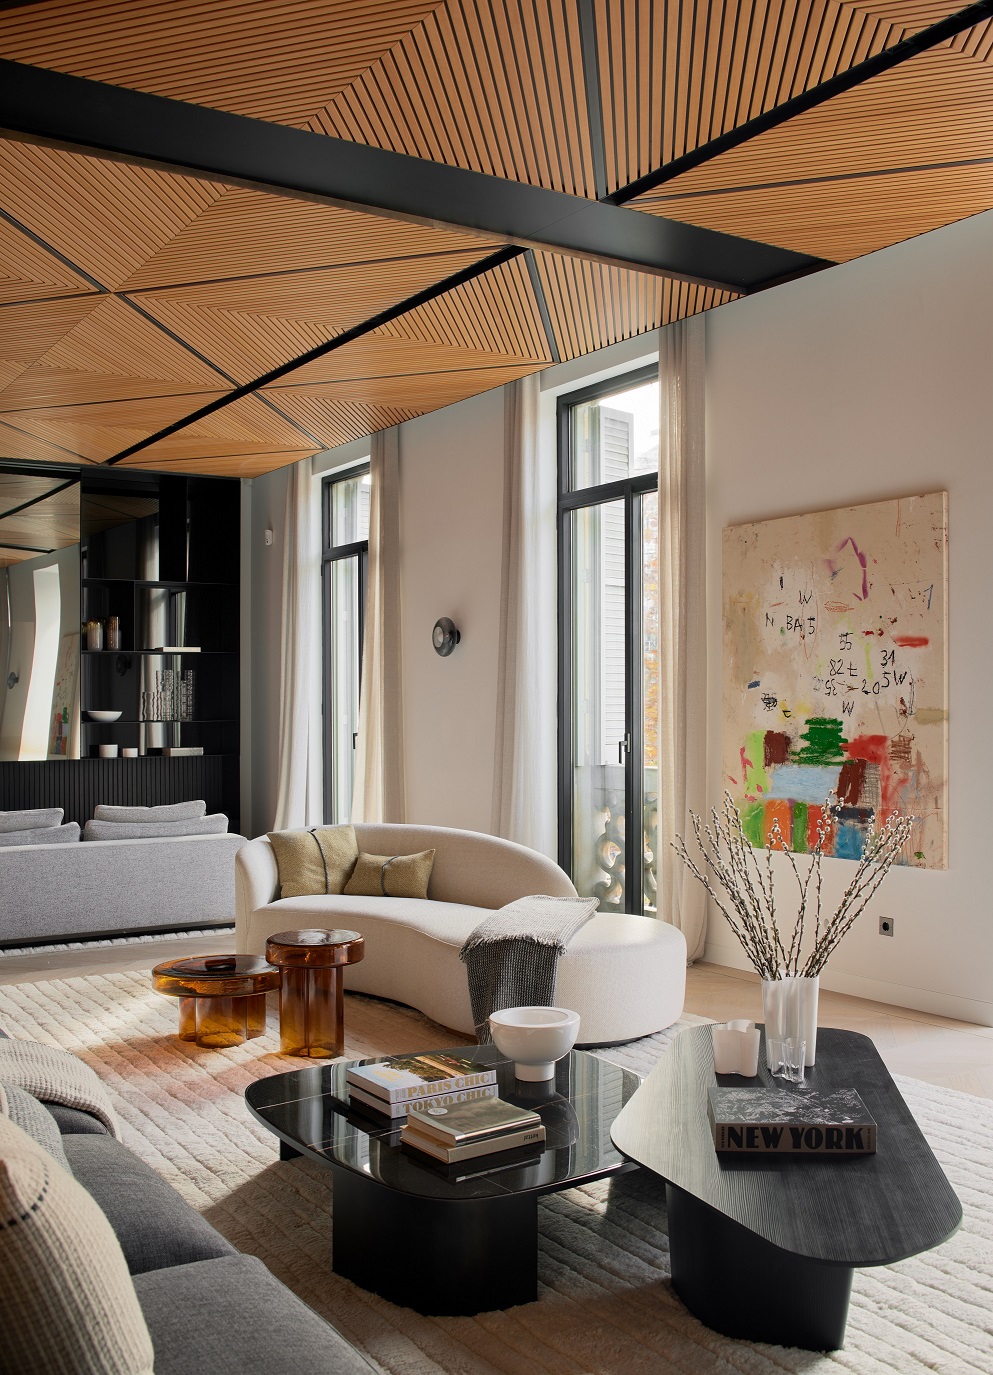 Paseo de Gracia Apartment LUV Studio Pol Viladoms Livingroom 6 - LUV Studio - Architecture et design - Barcelone